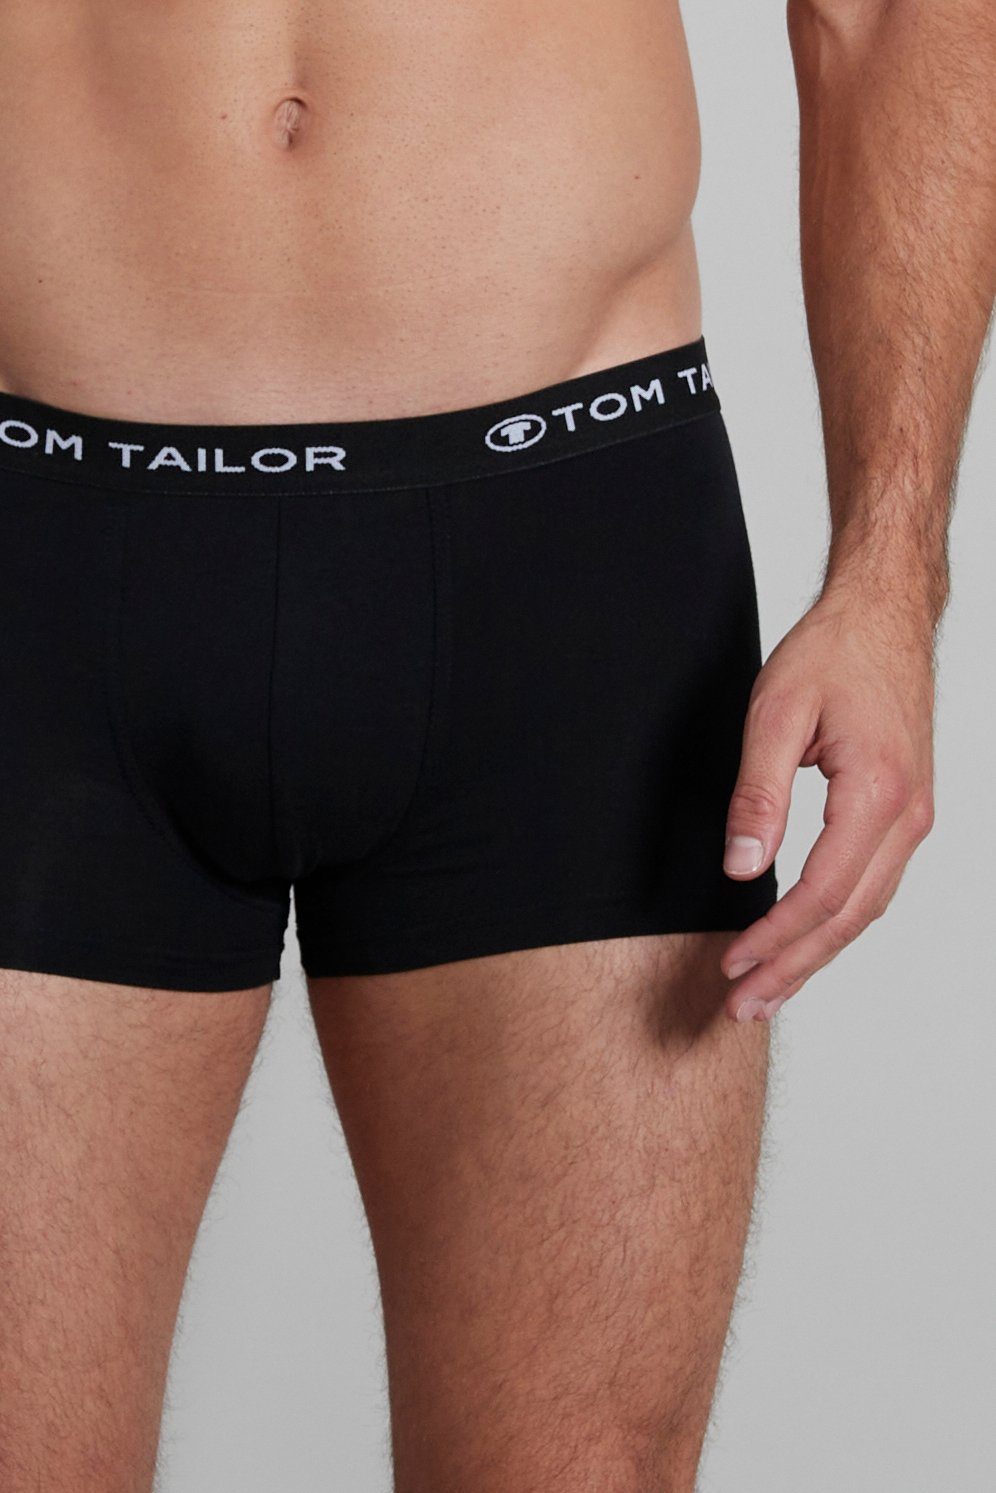 TOM TAILOR Hip uni TAILOR 5er Pack Pants (5-St) TOM schwarz-dunkel-uni schwarz Herren Boxershorts